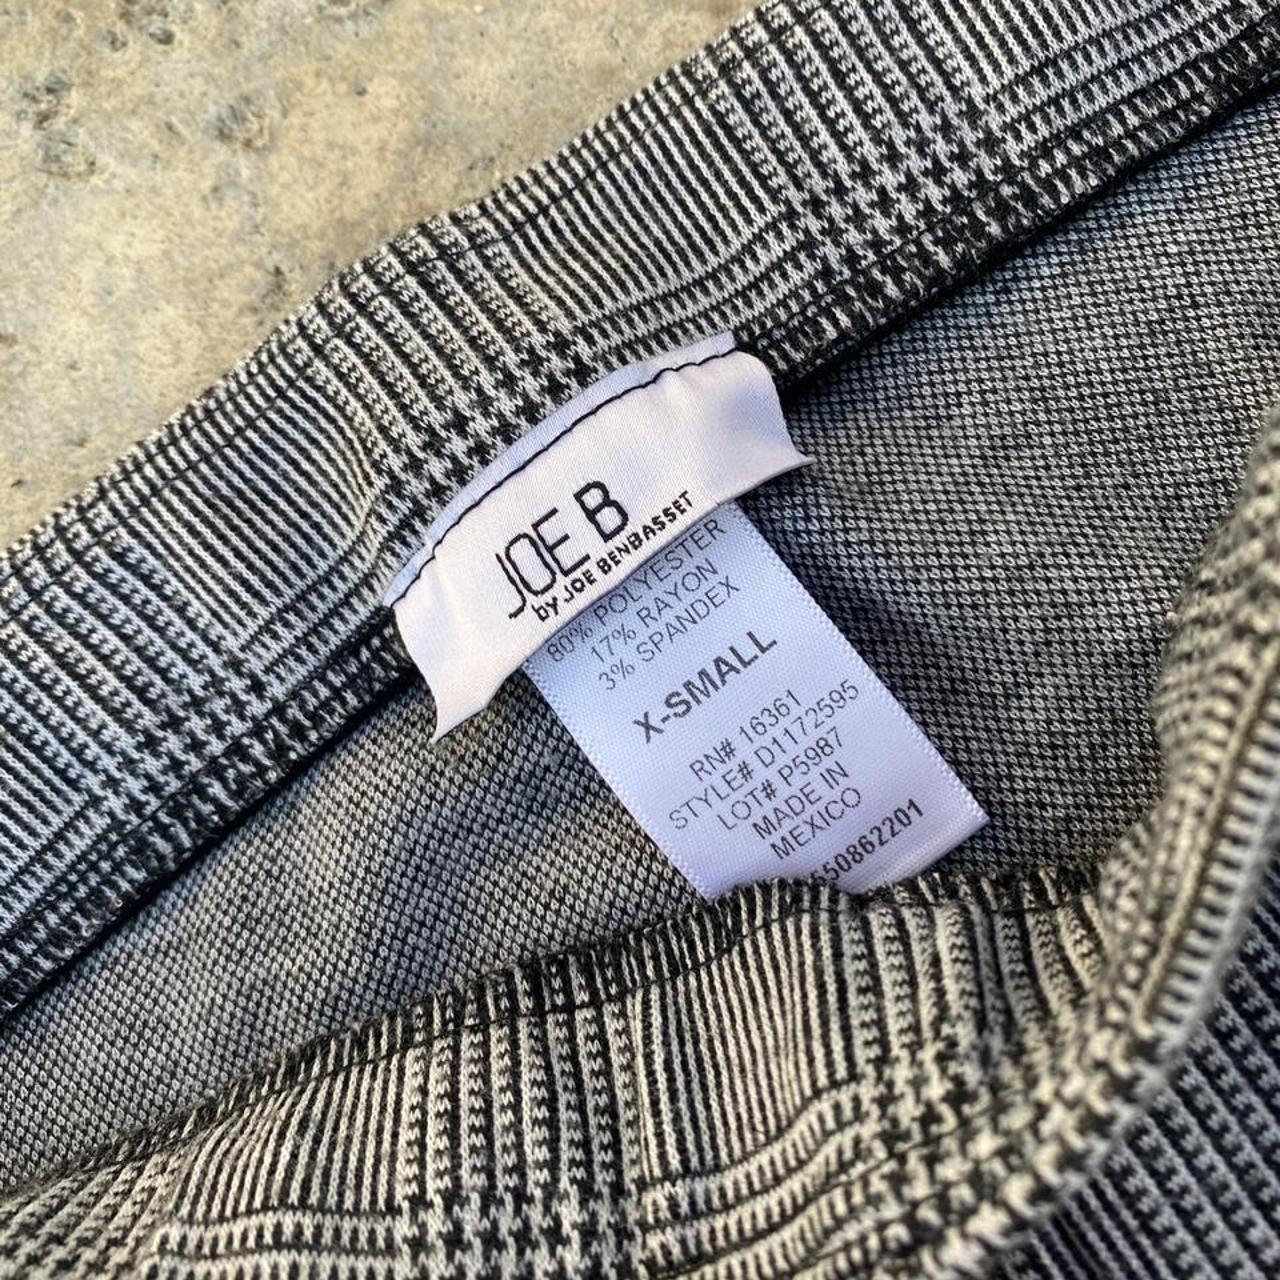 Product Image 3 - Joe B patterned grey trousers